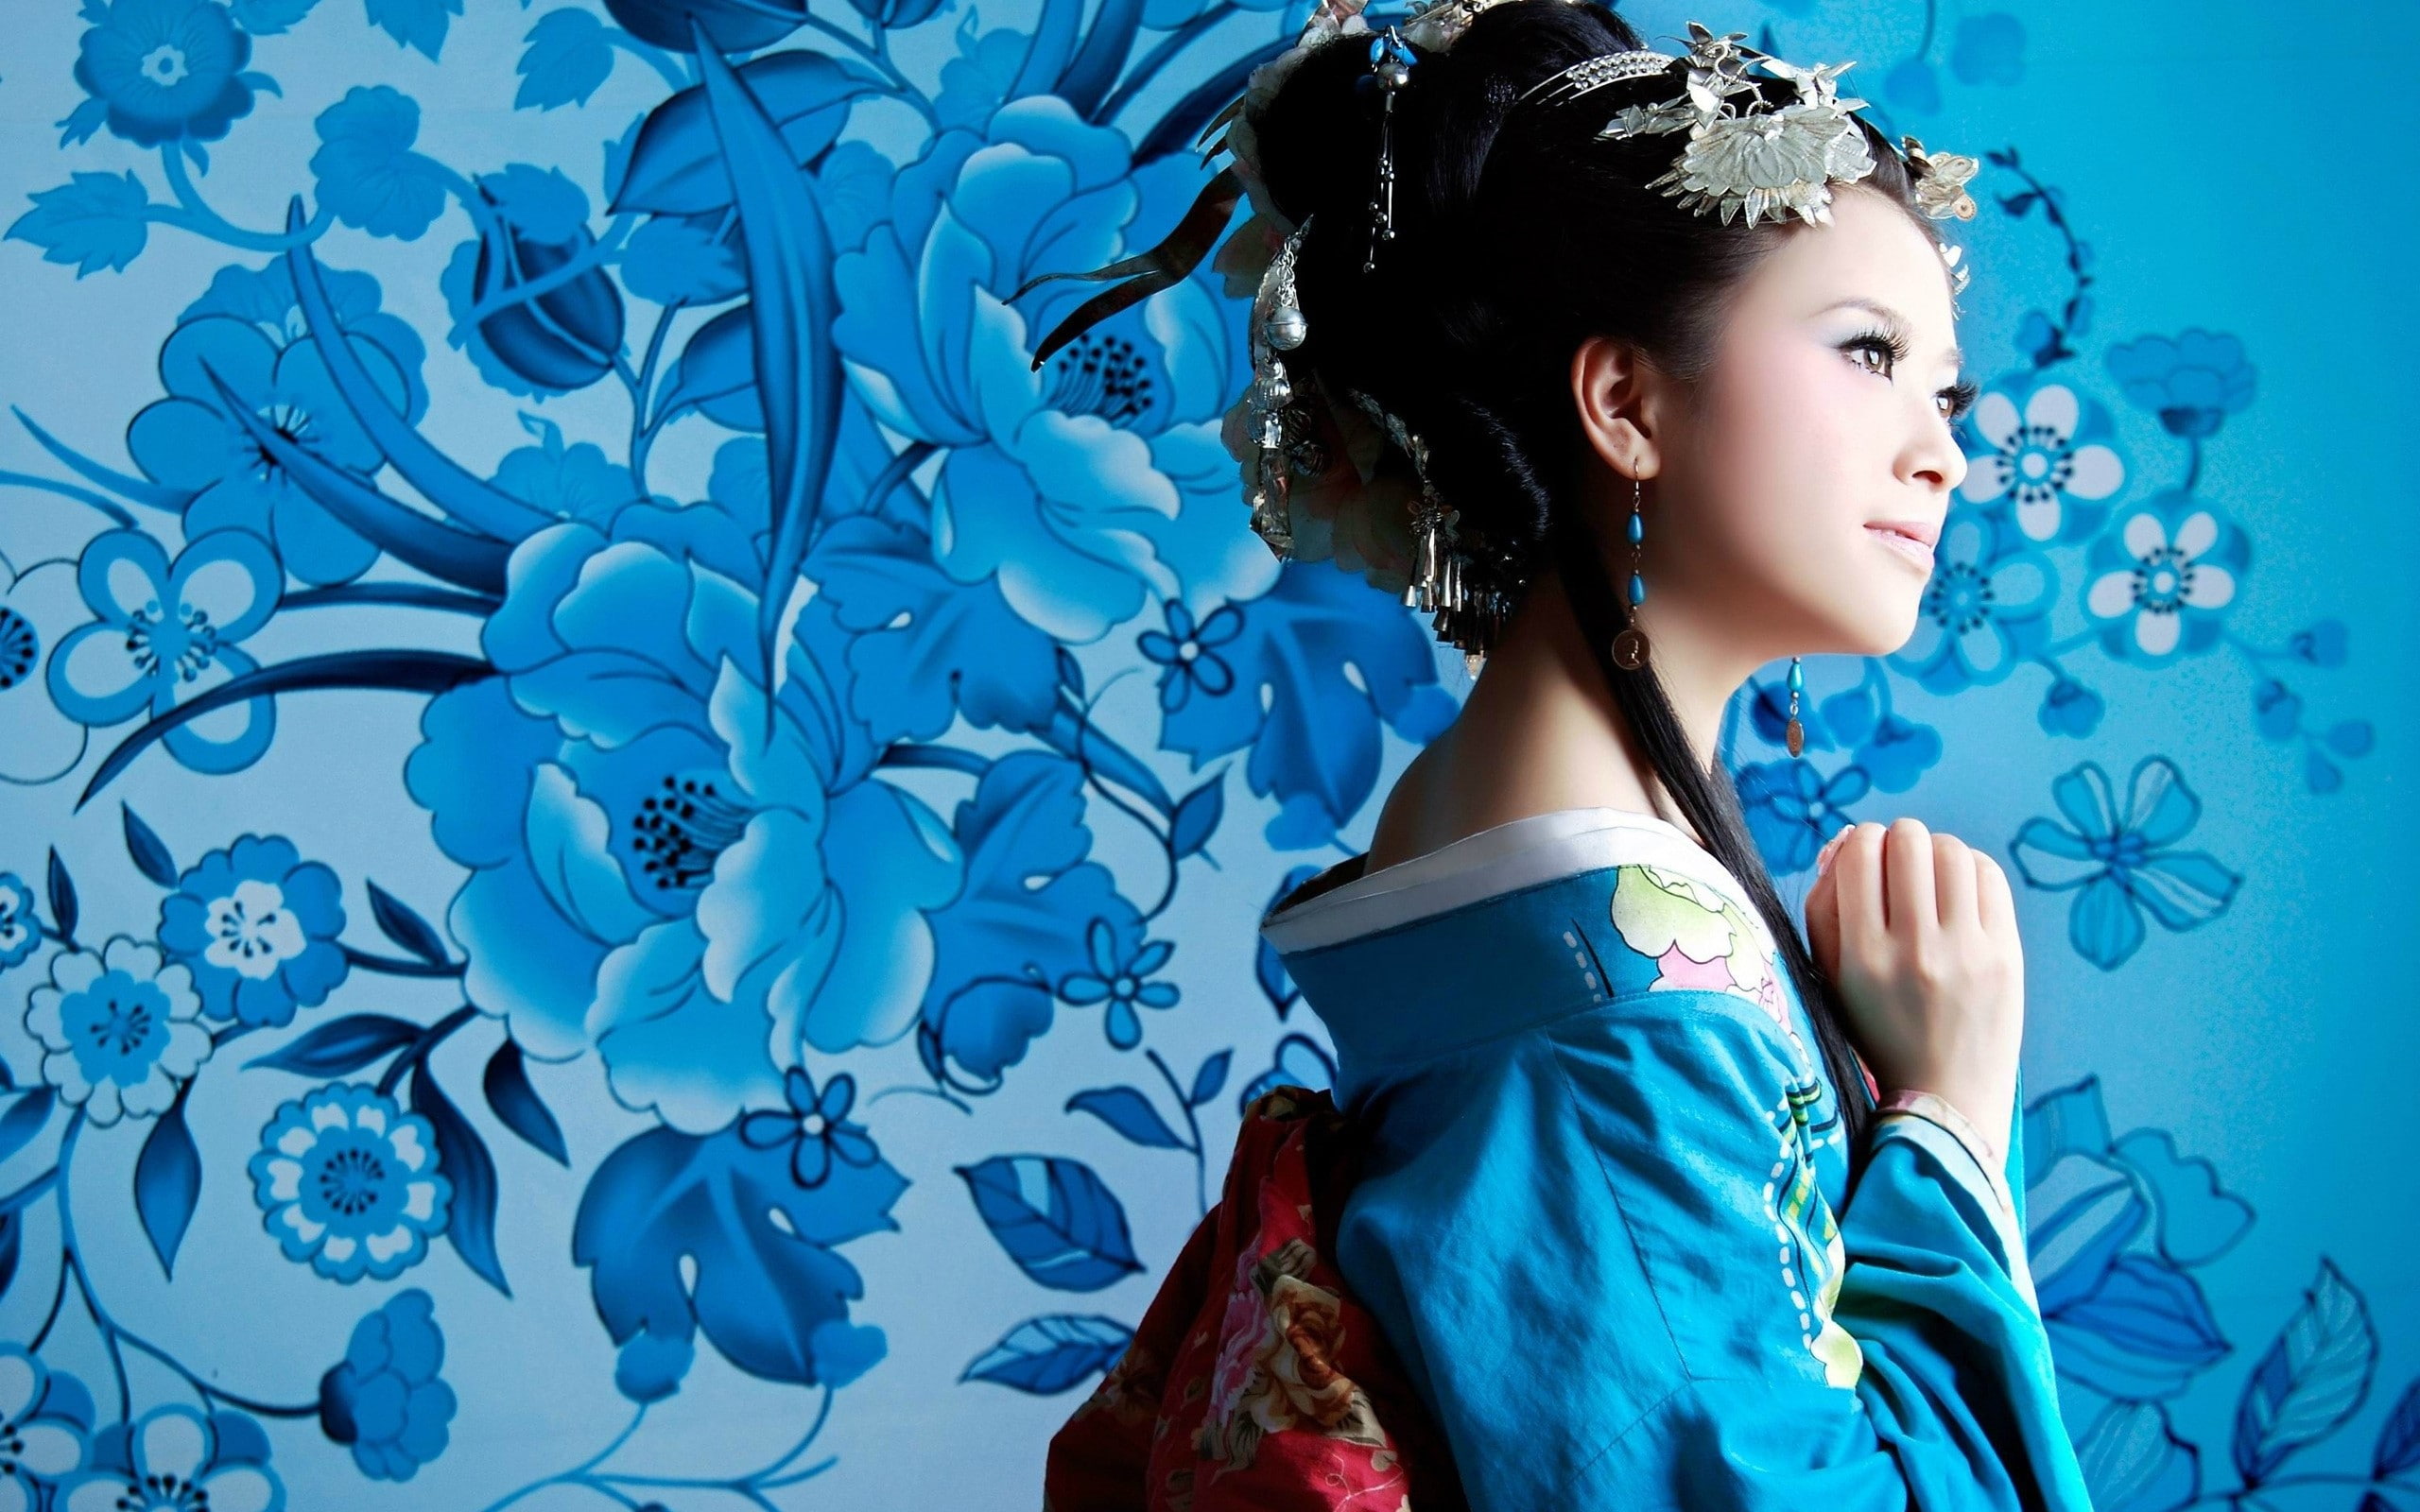 Asian, Geisha, Kimono, Brunette, Patterns, one person, blue